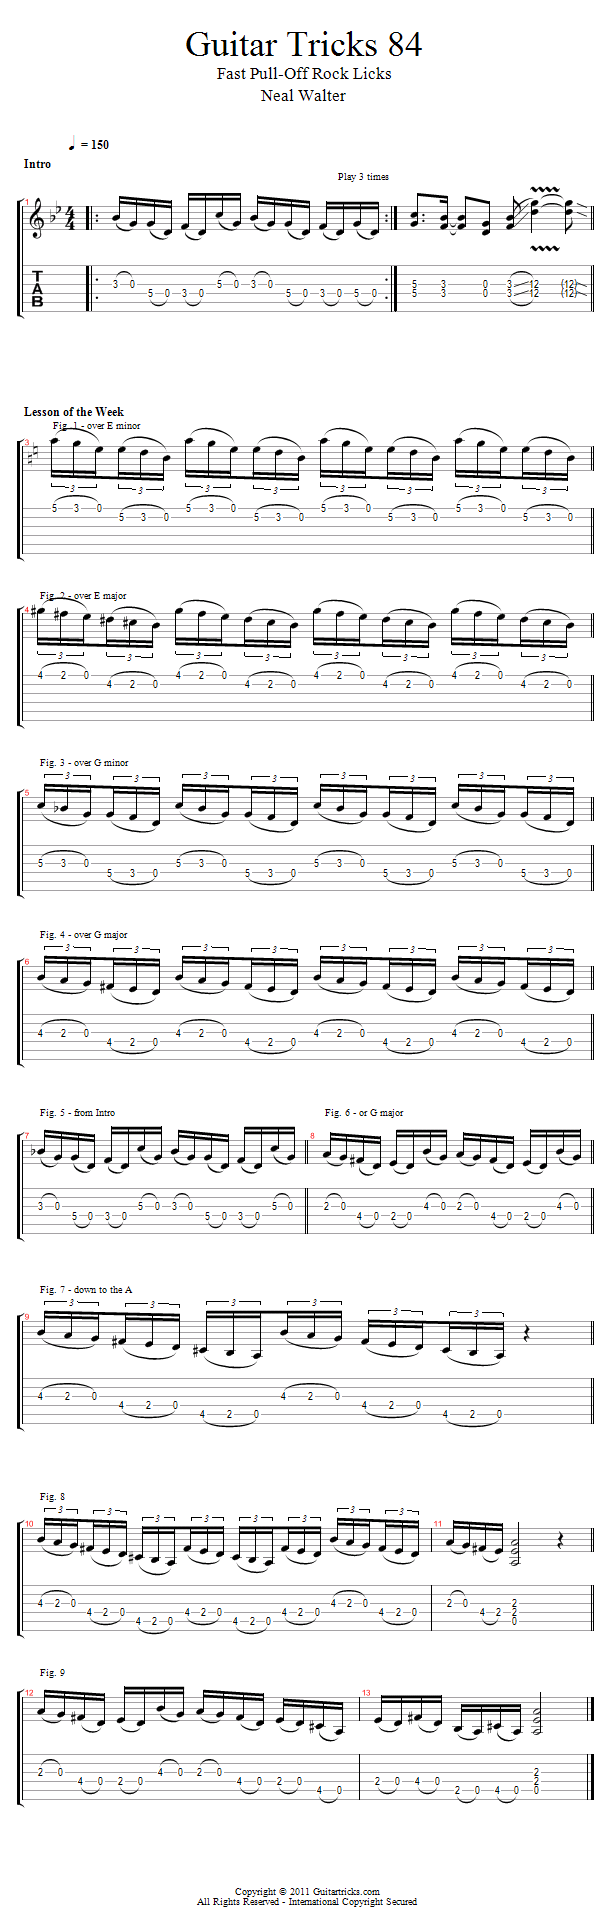 Guitar Tricks 84: Fast Pull-Off Rock Licks song notation